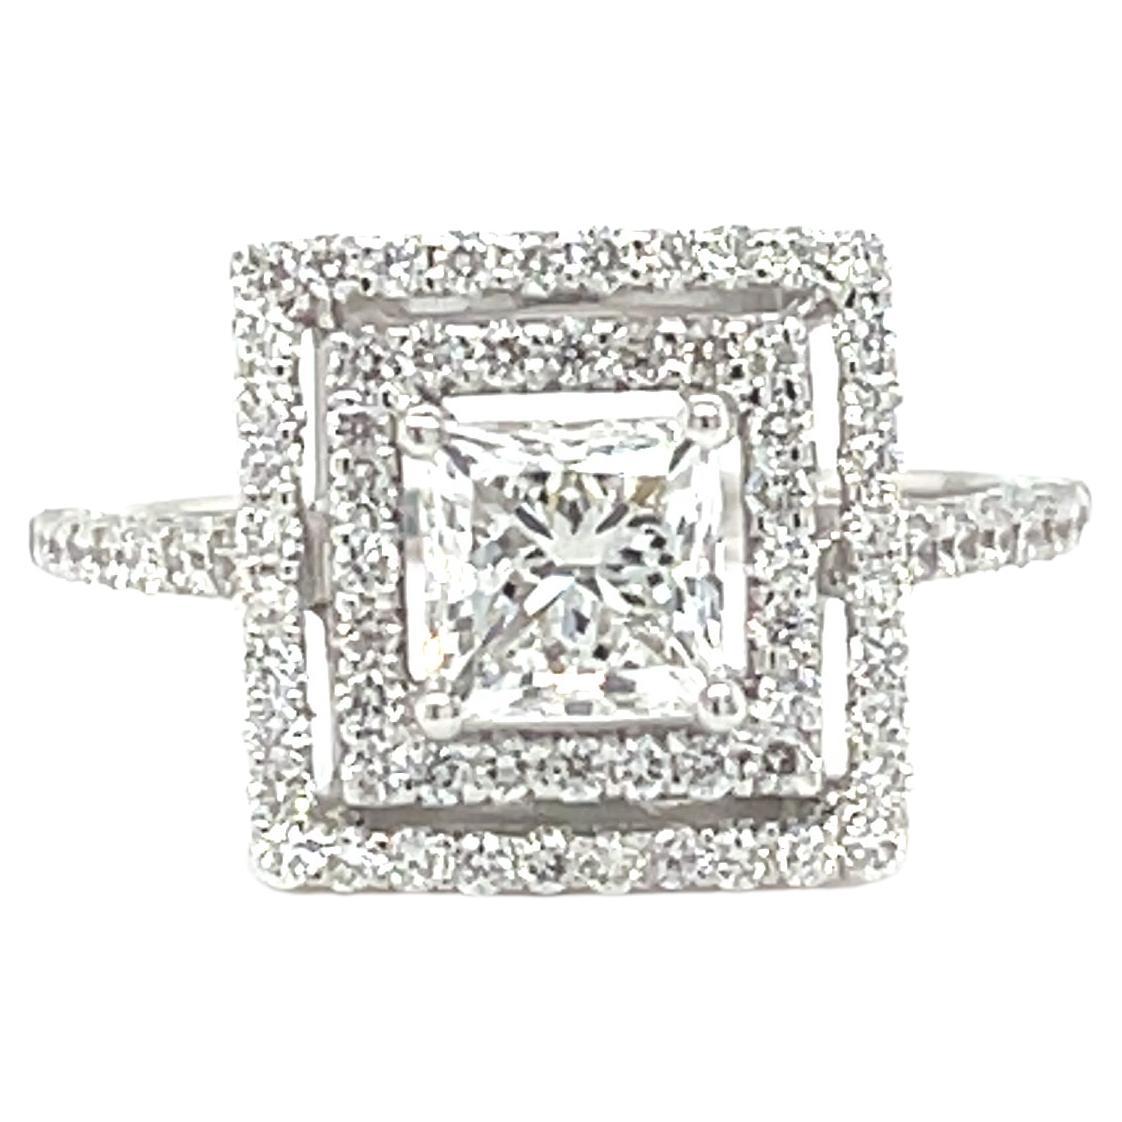 GIA Certified Princess Cut 1.01 Carat F VVS2 Diamond Ring in 18K White Gold